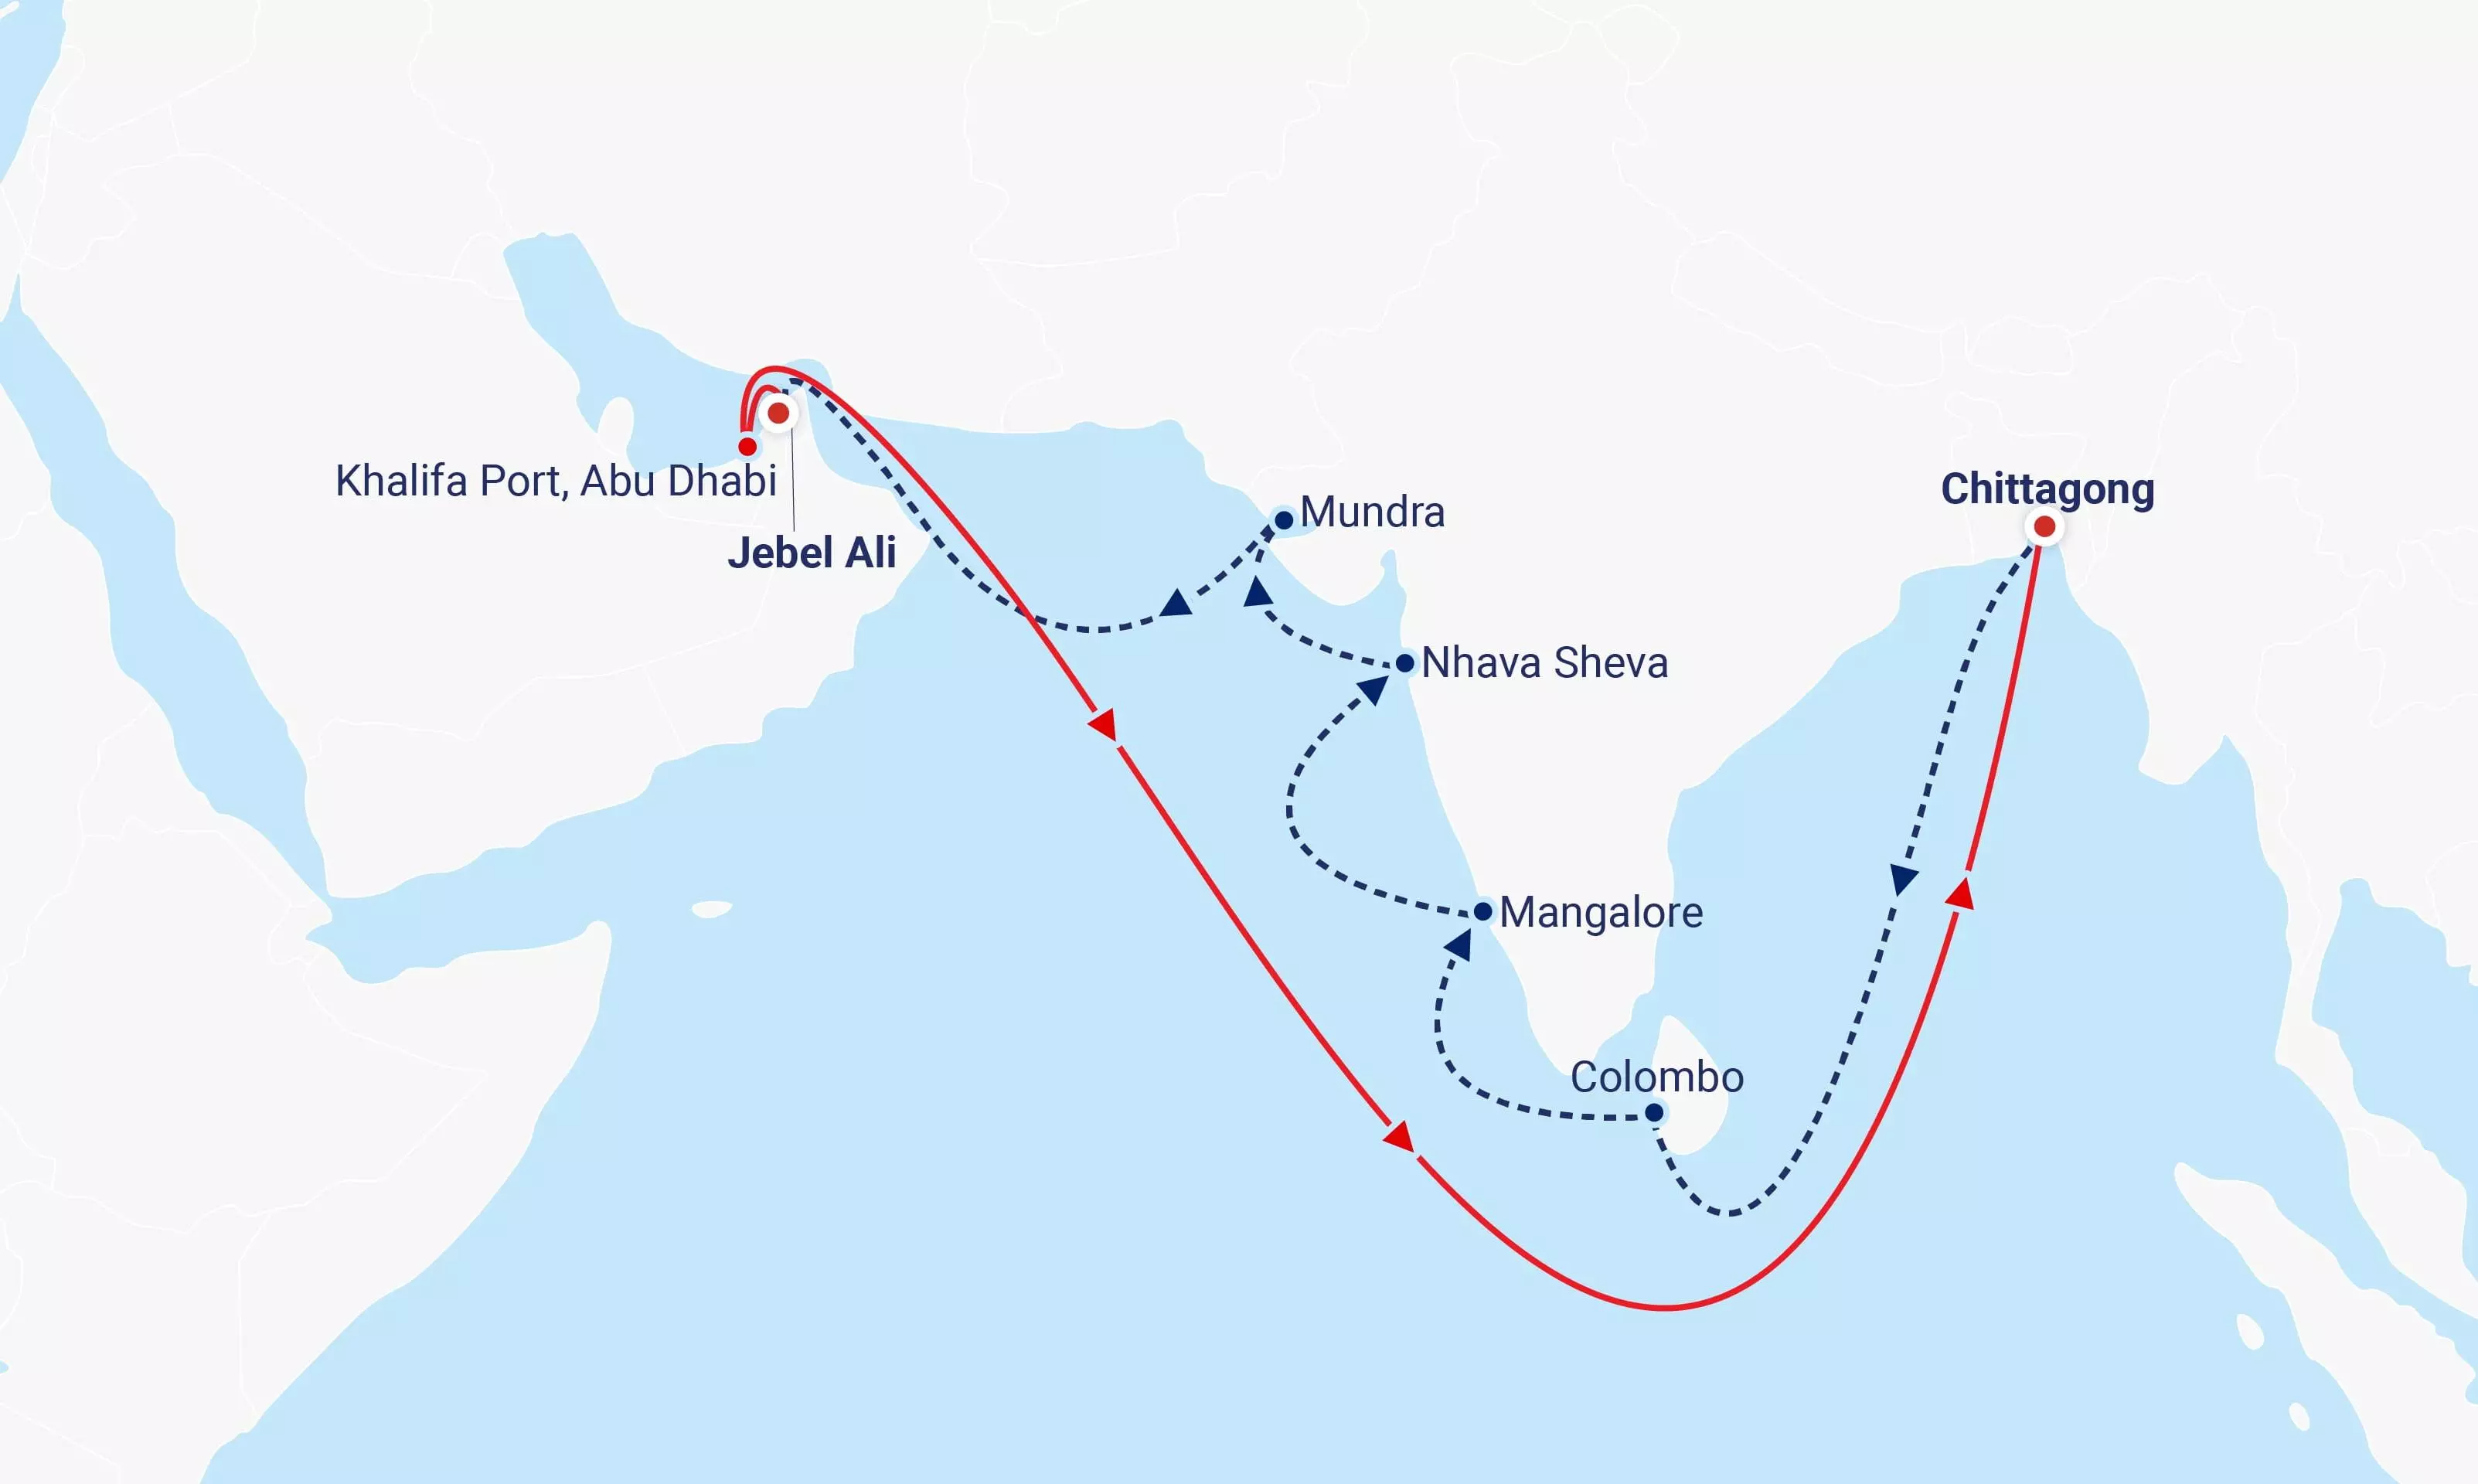 CMA CGM to launch new service connecting Bangladesh, India, Gulf